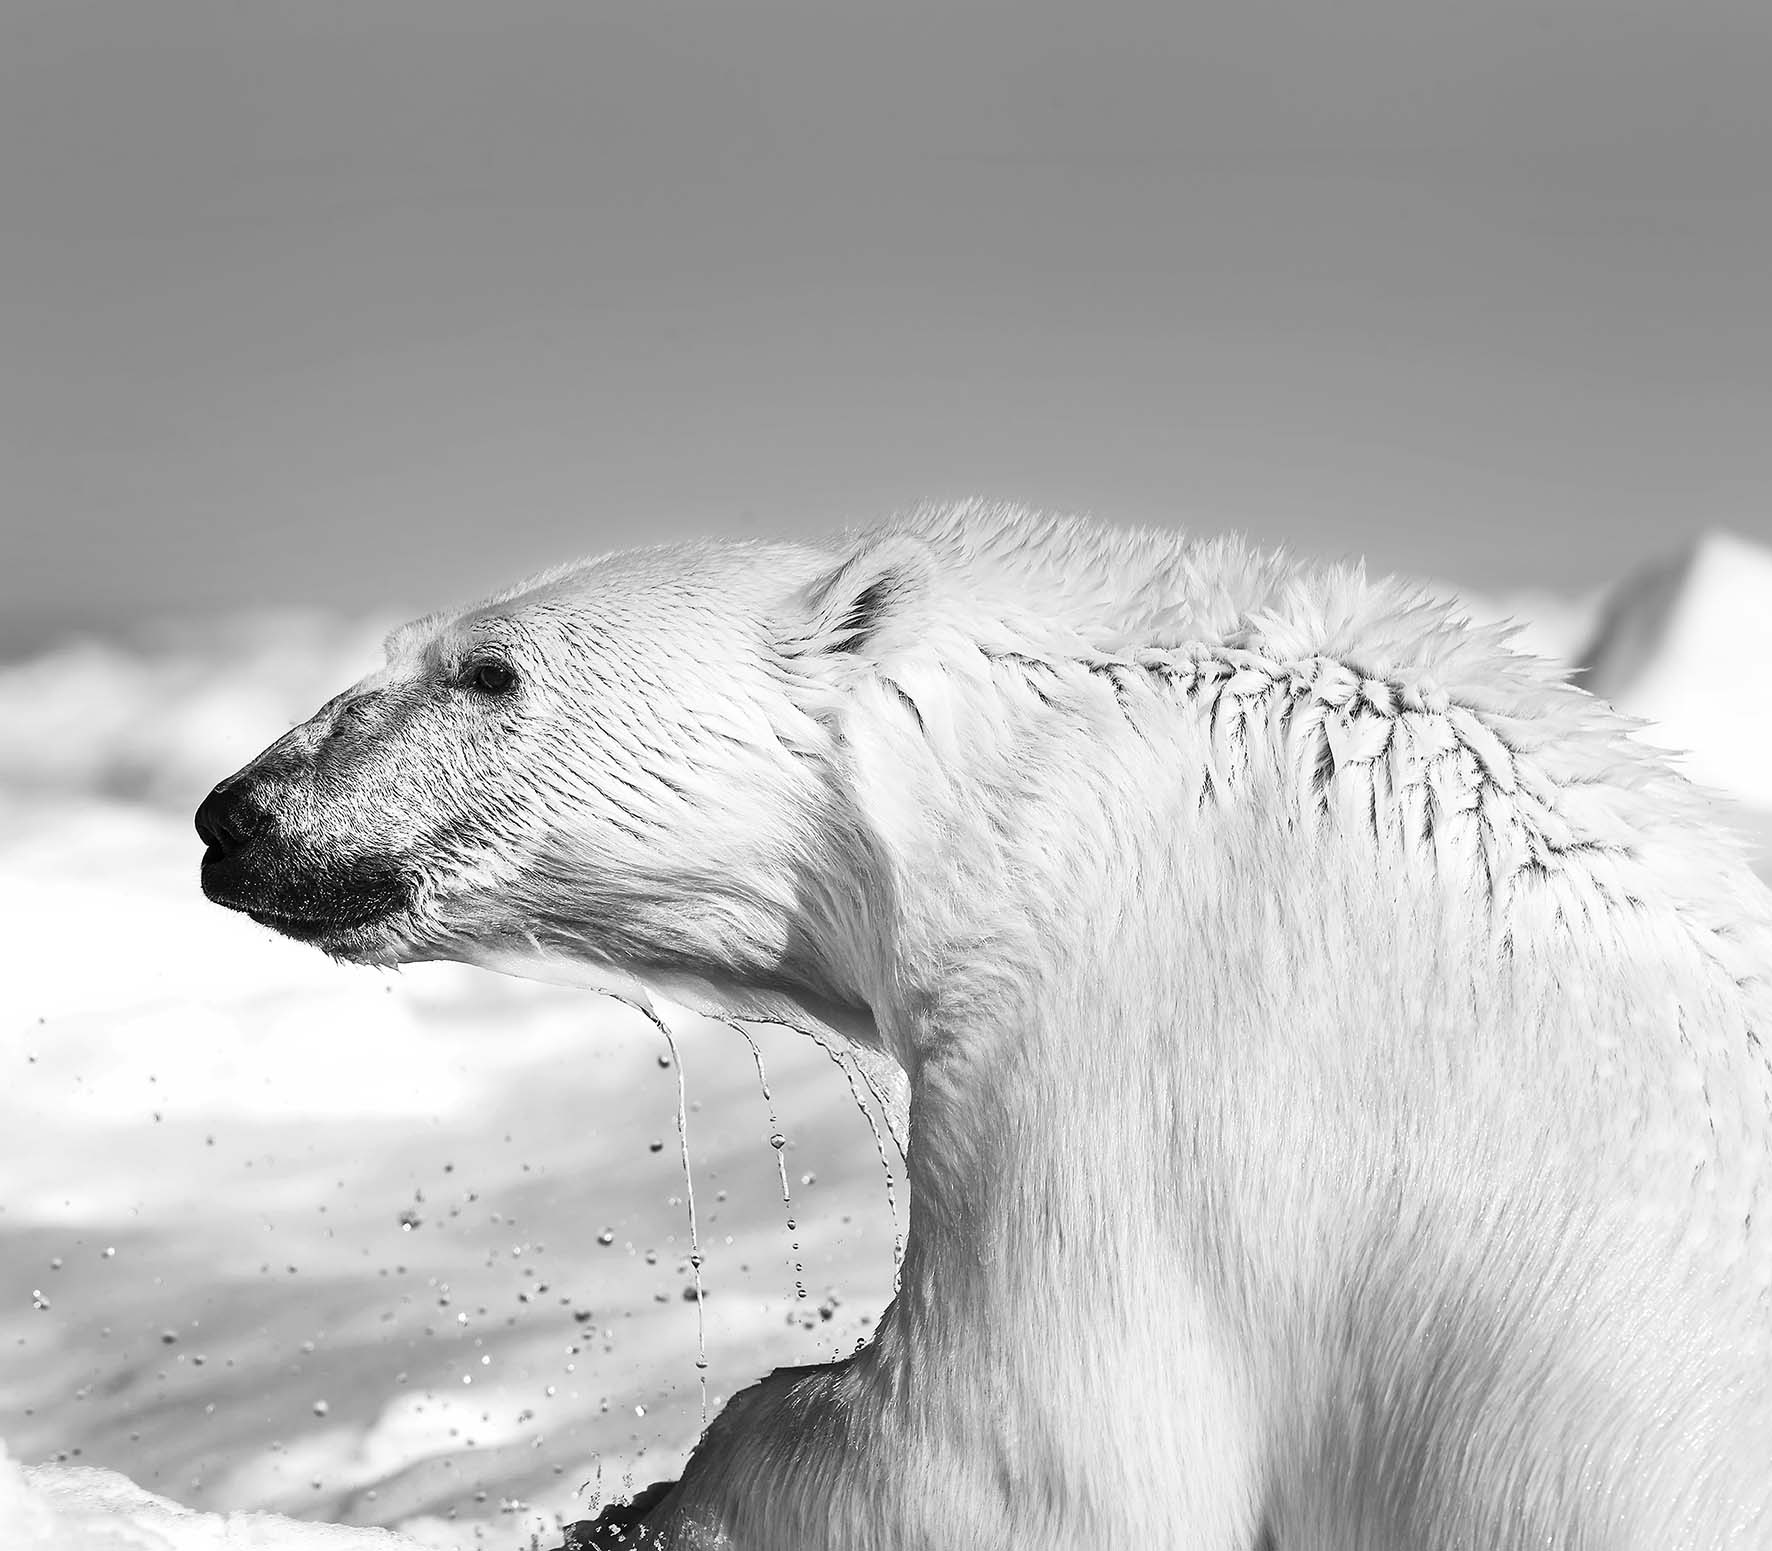 Mostra casa tre oci artico ultima frontiera orso polare Carsten Egevang West Greenland Thule 2013 Carsten Egevang